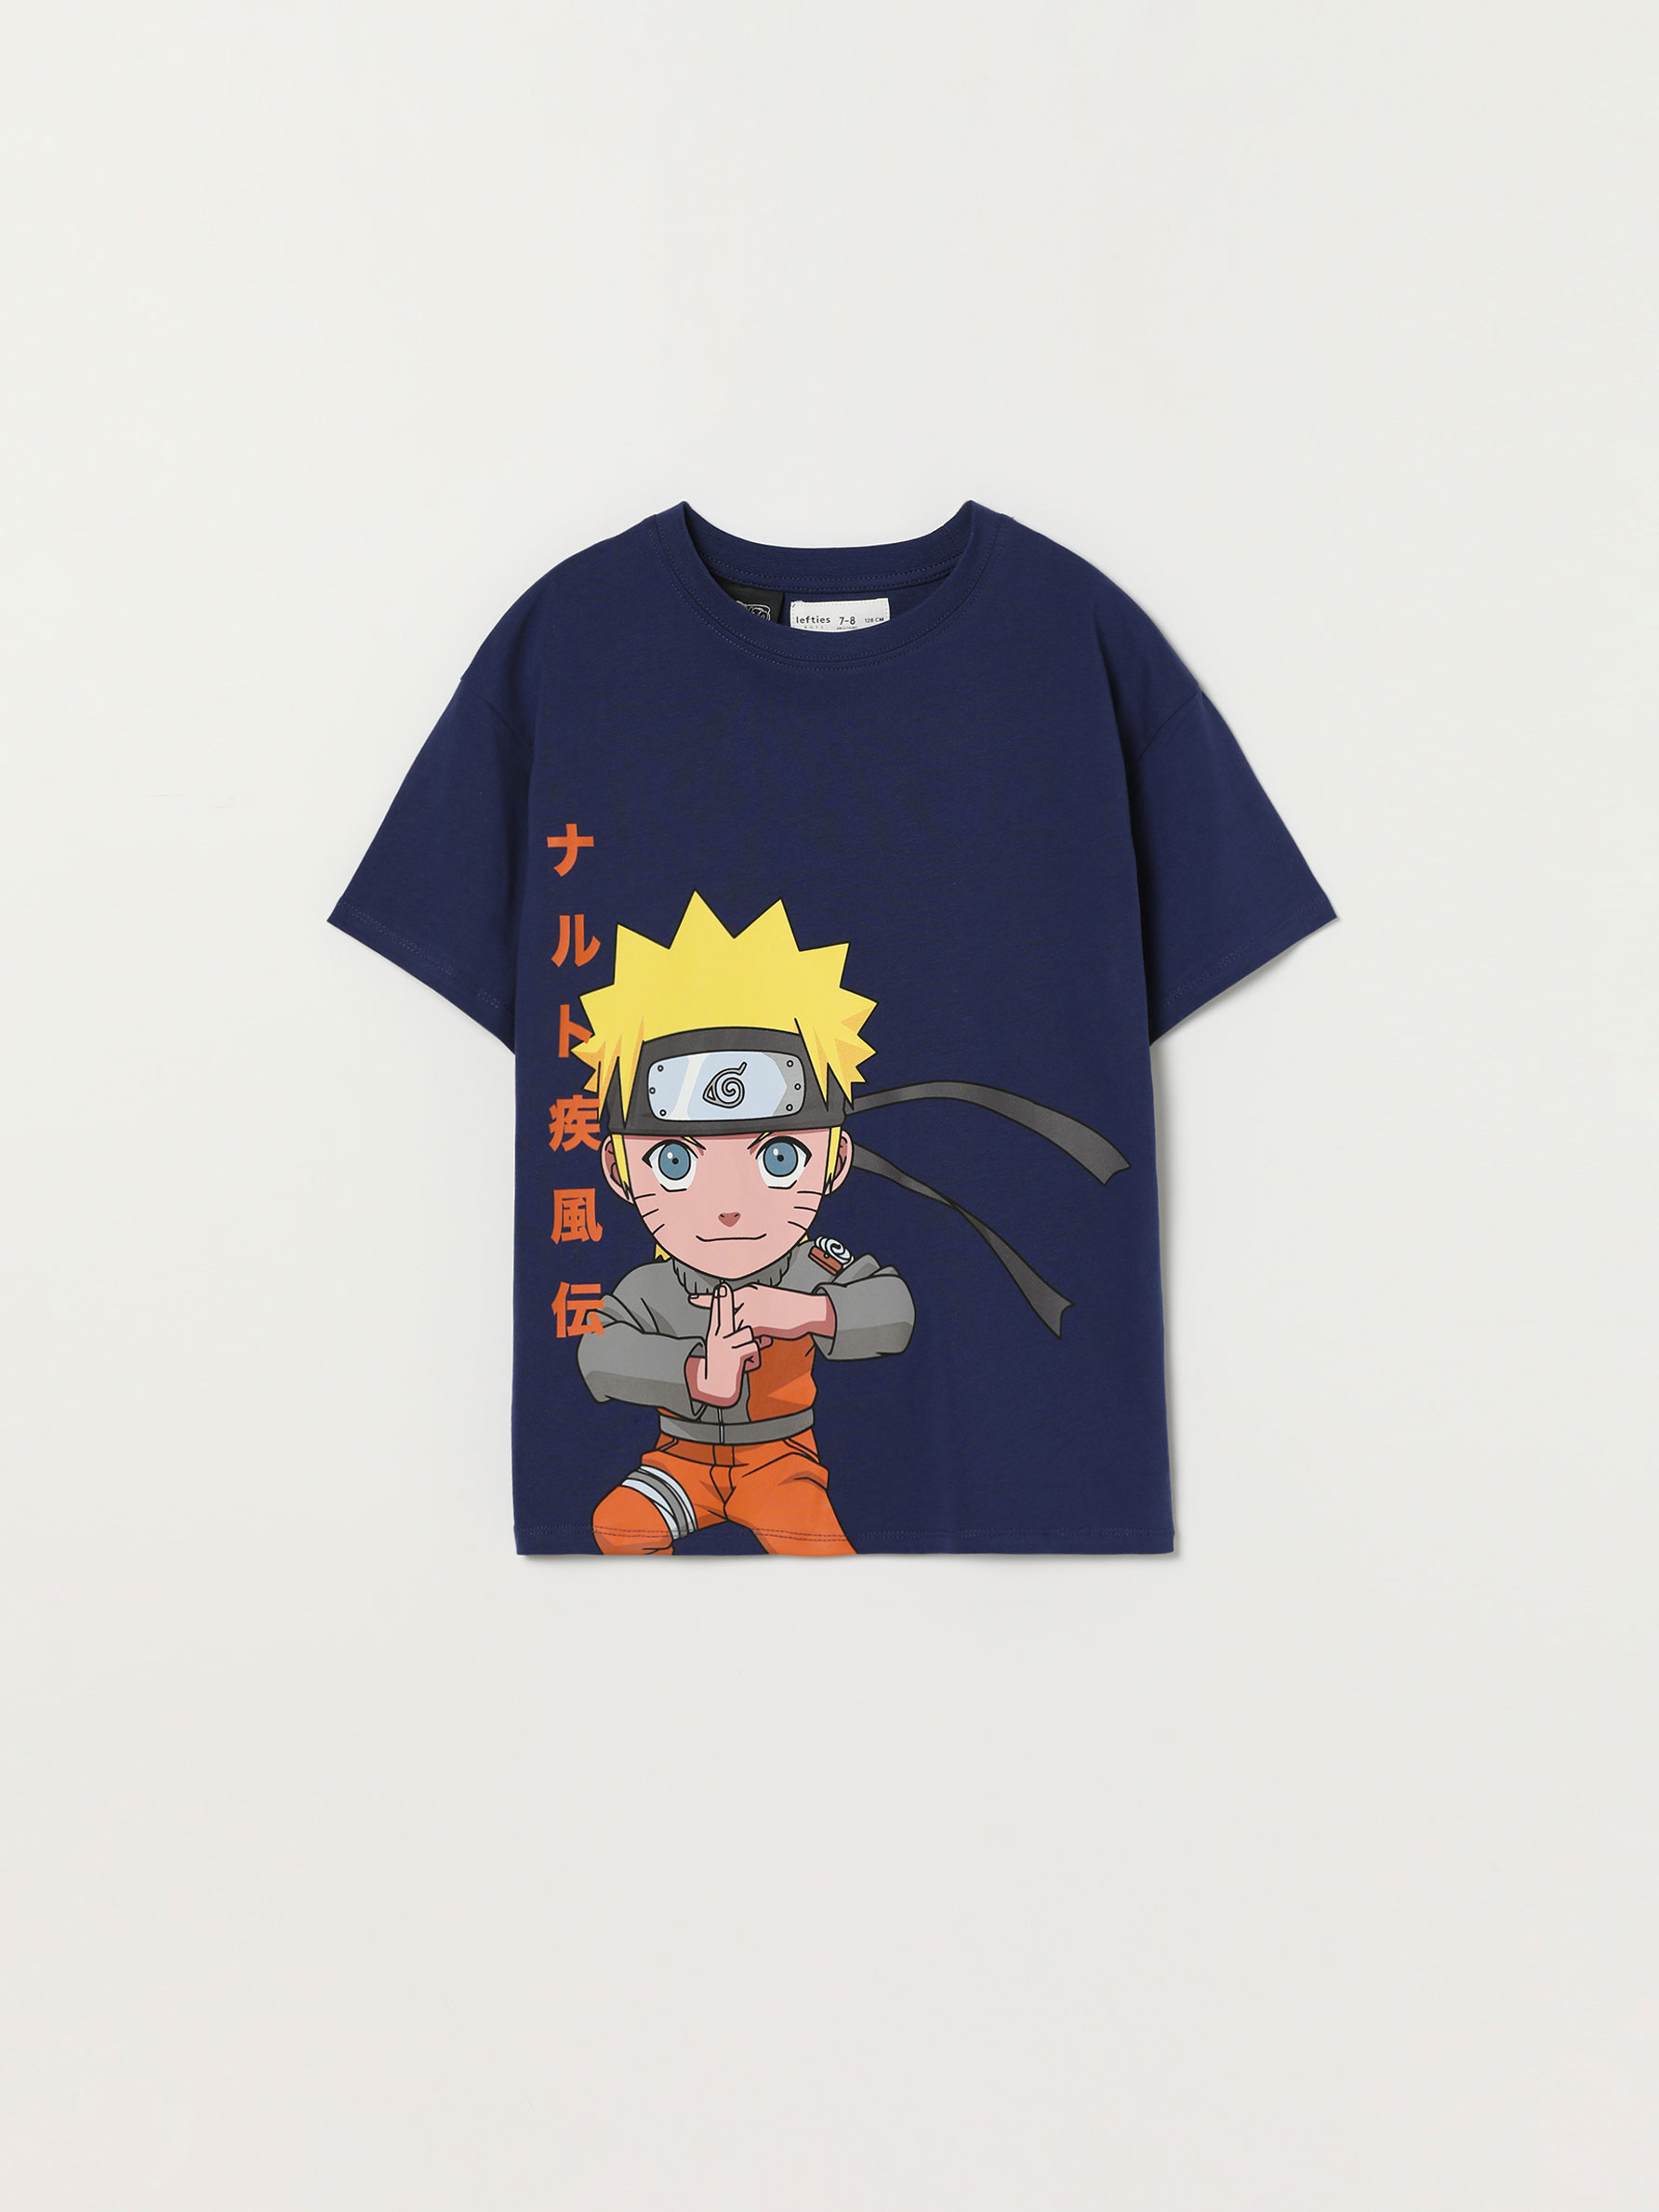 Roblox - Camiseta Fantasia Infantil Personagens Meninos Naruto